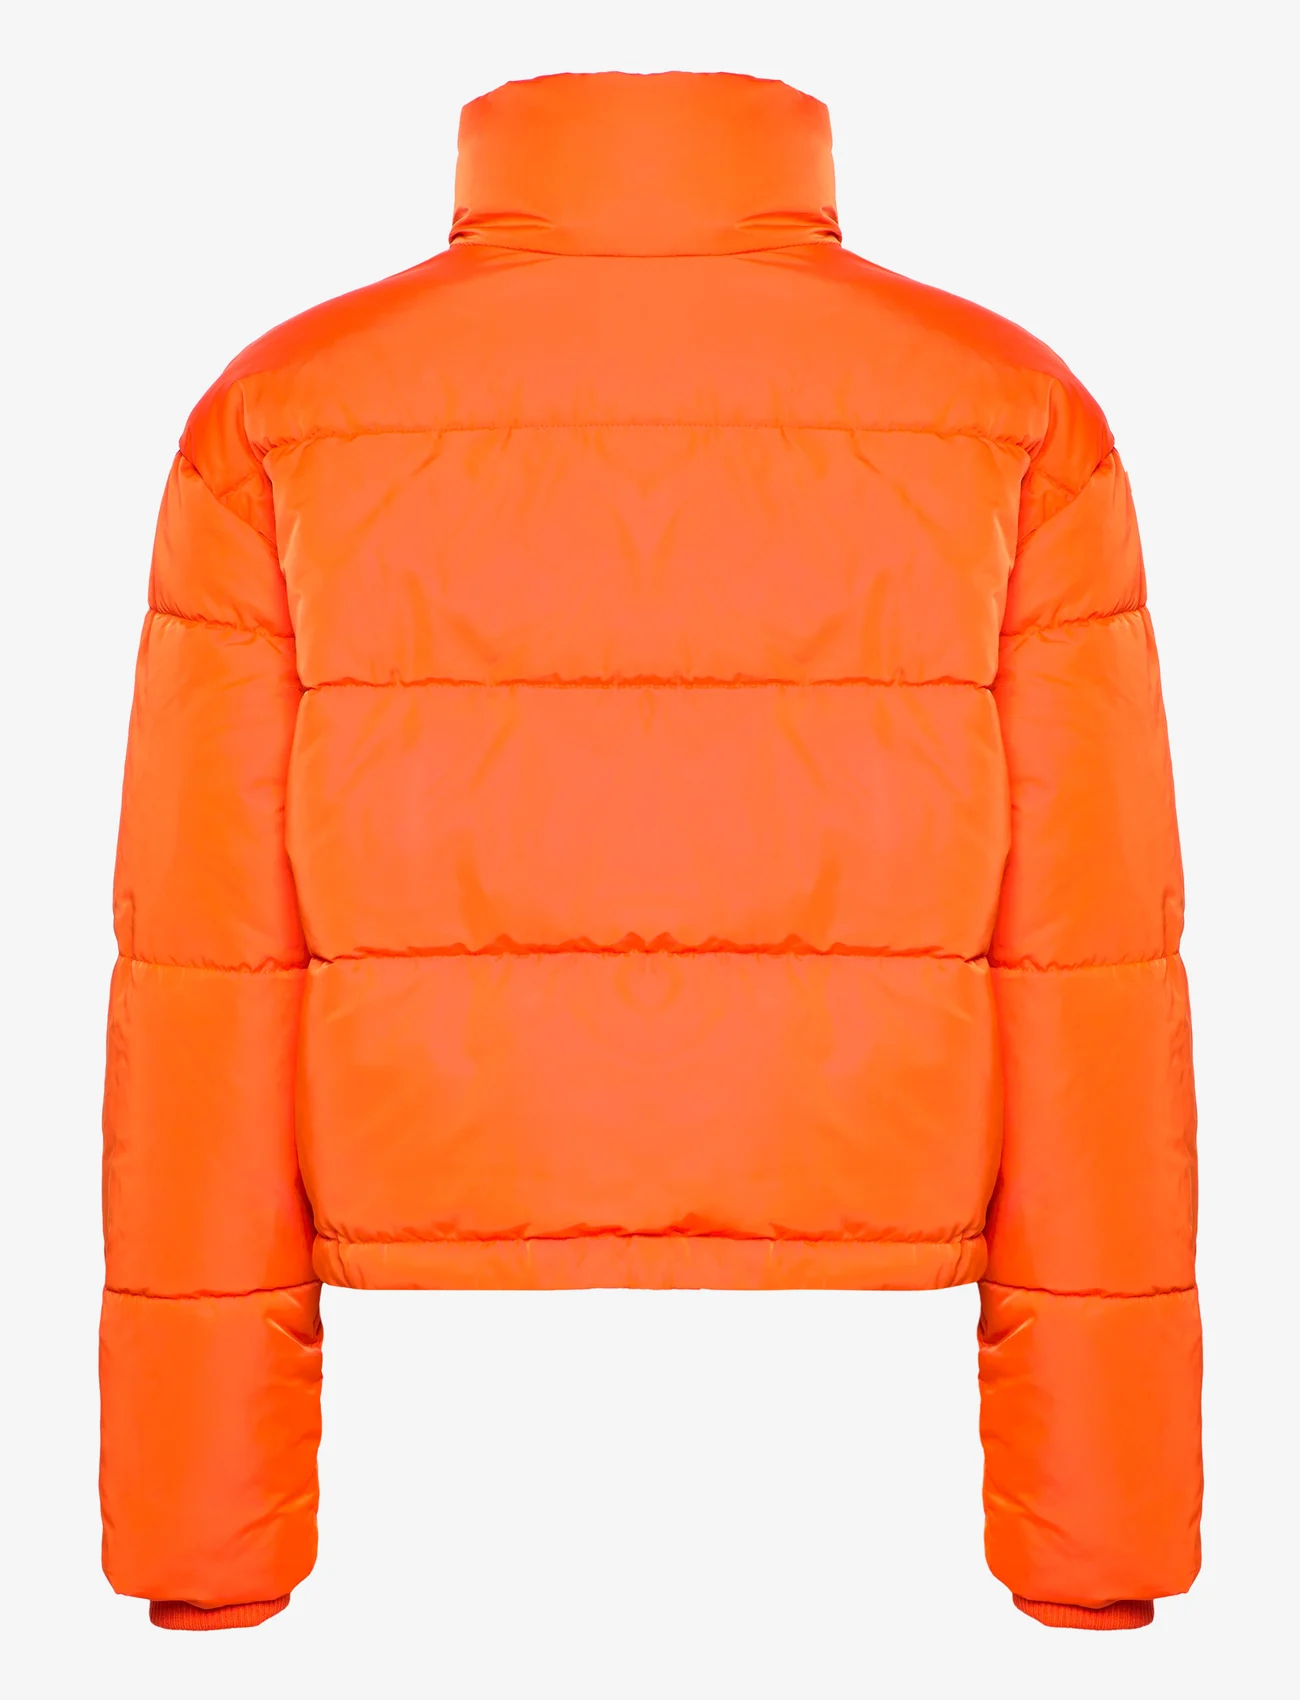 Coster Copenhagen - Short puffer jacket - winter jackets - hot orange - 1